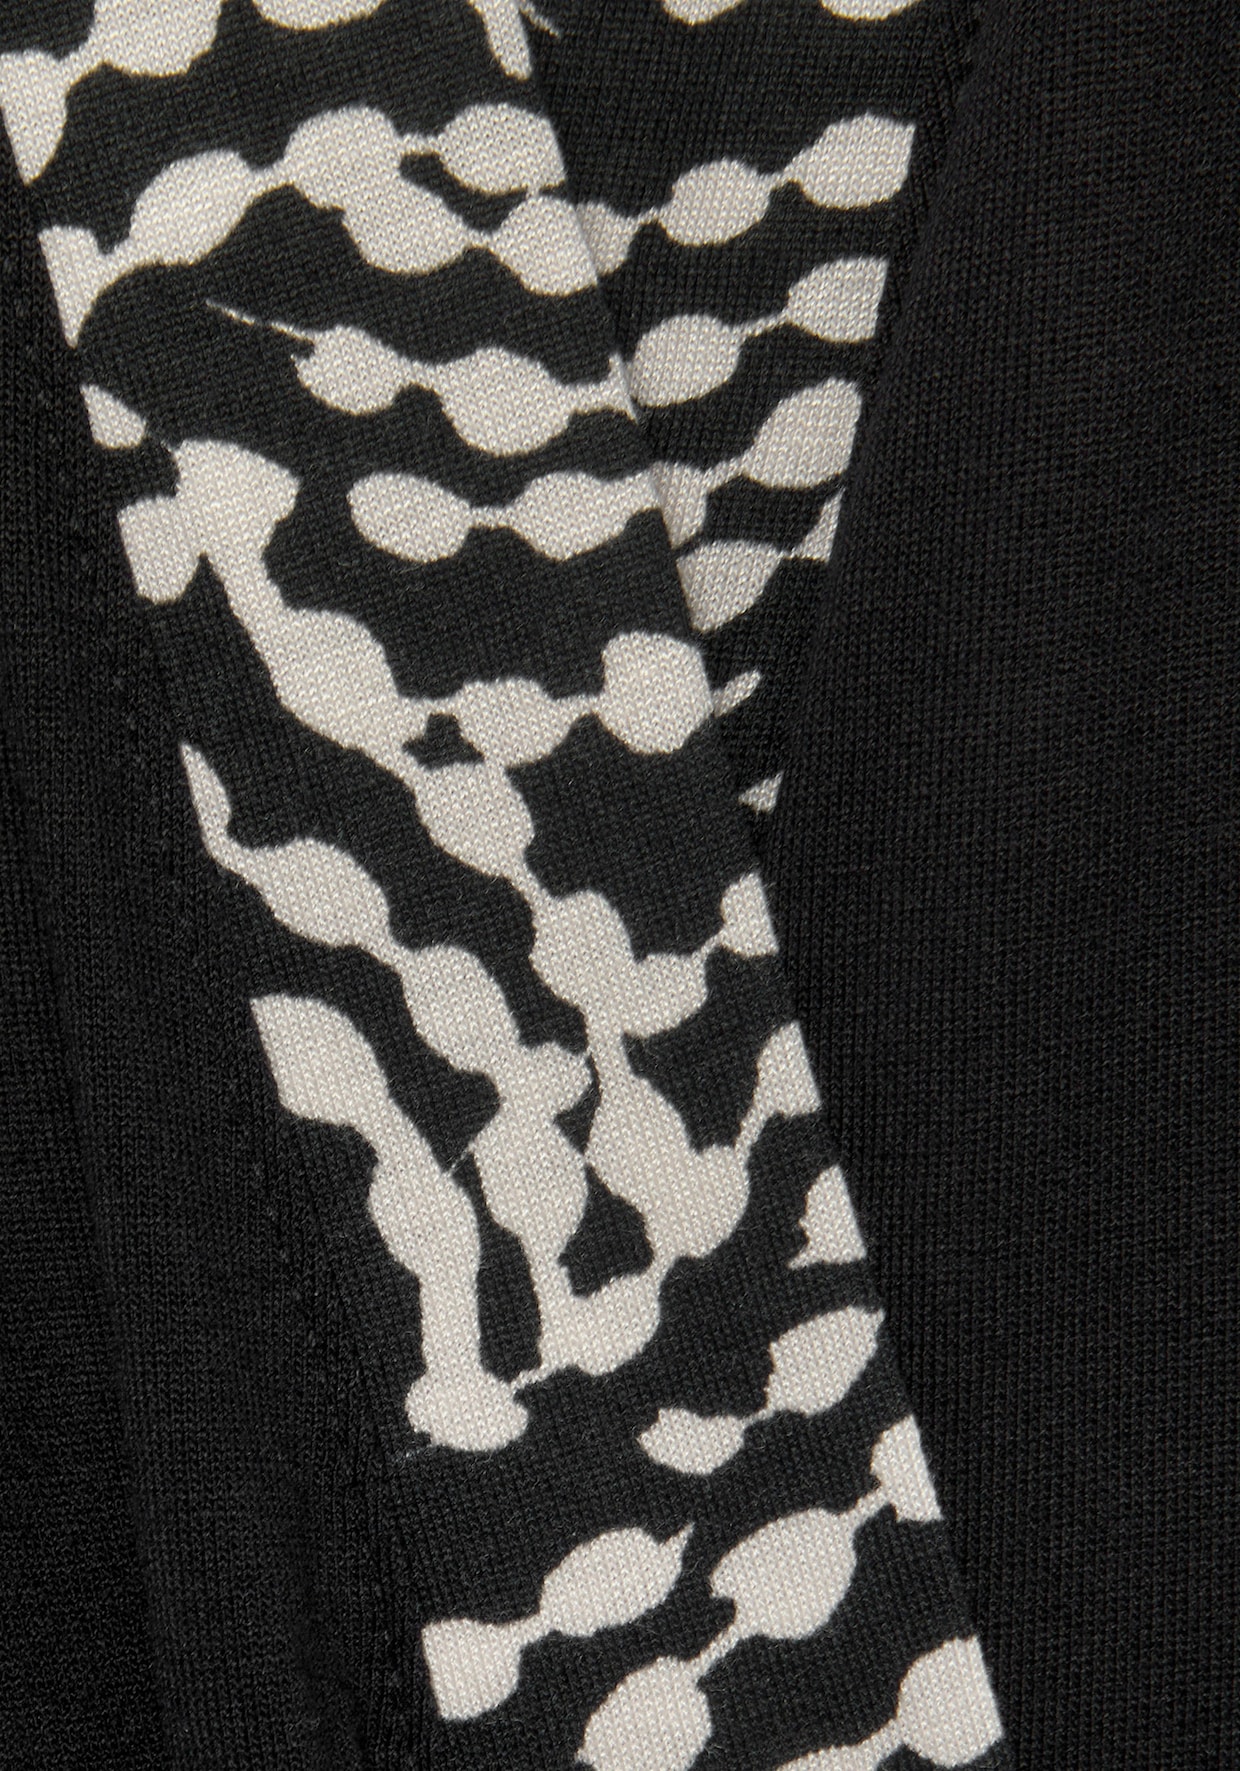 LASCANA Kimono - zwart/wit gestippeld